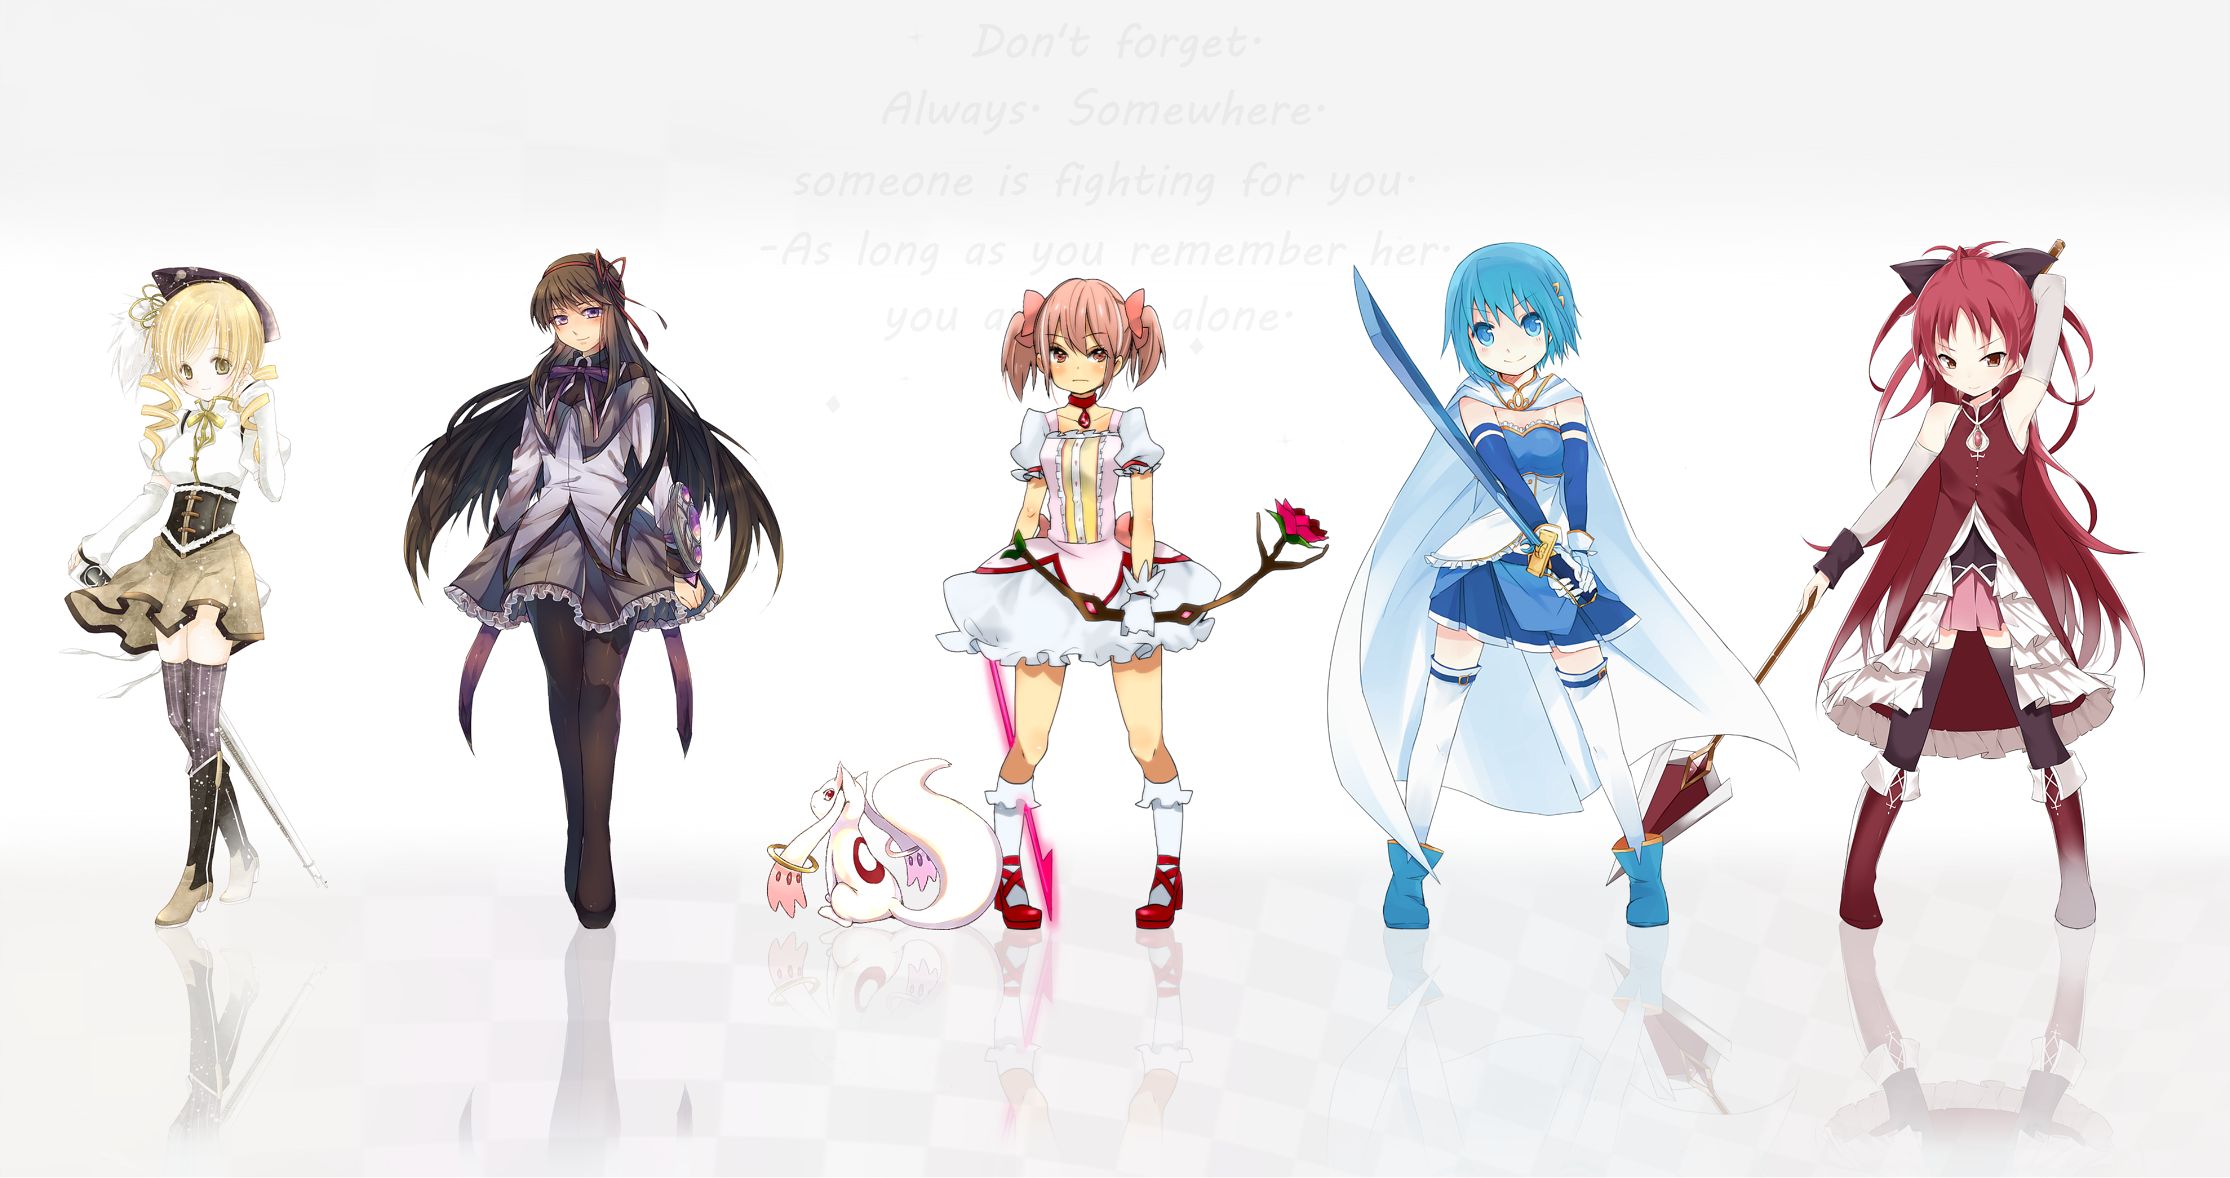 Descarga gratis la imagen Animado, Kyōko Sakura, Puella Magi Madoka Magica, Homura Akemi, Madoka Kaname, Mami Tomoe, Sayaka Miki, Kyuubey (Puella Magi Madoka Mágica) en el escritorio de tu PC